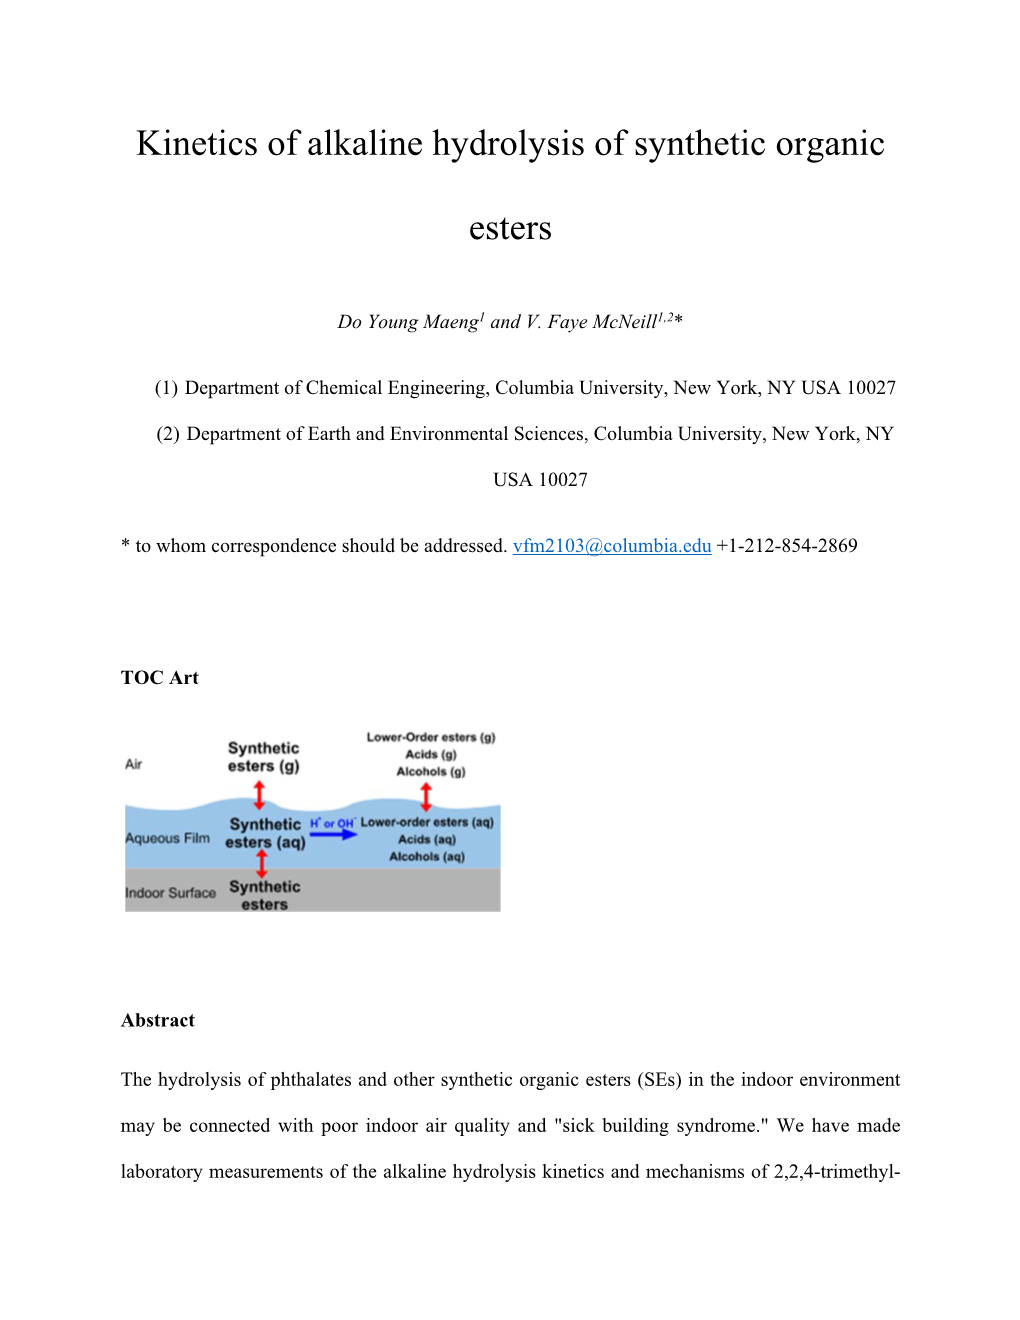 Kinetics of Alkaline Hydrolysis of Synthetic Organic Esters